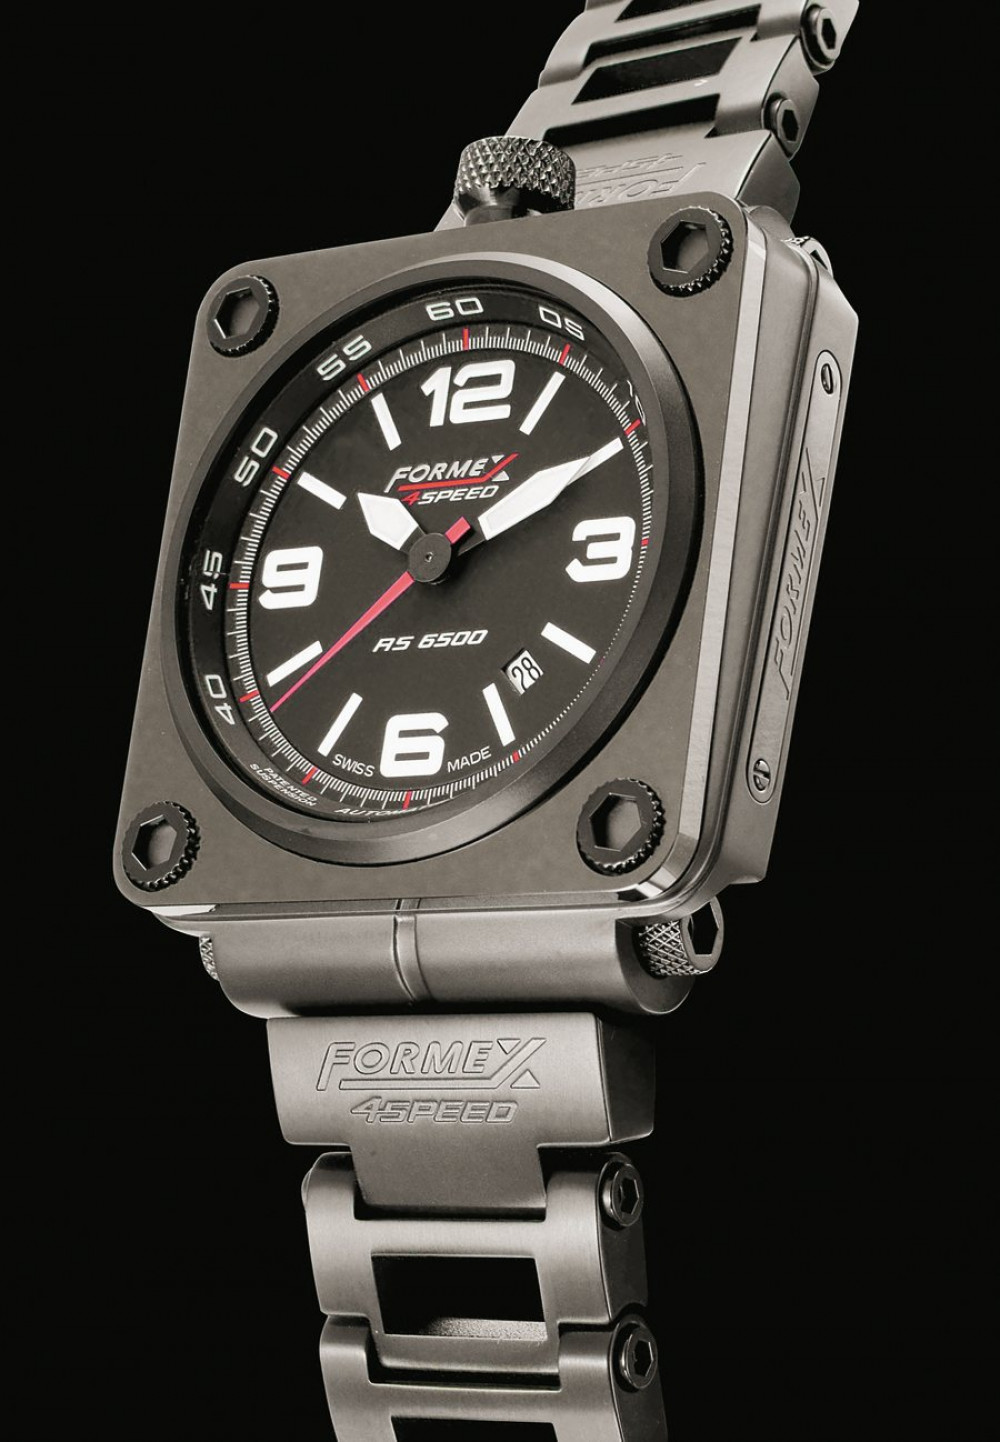 Zegarek firmy Formex 4 Speed, model AS6500 Automatic Limited Edition